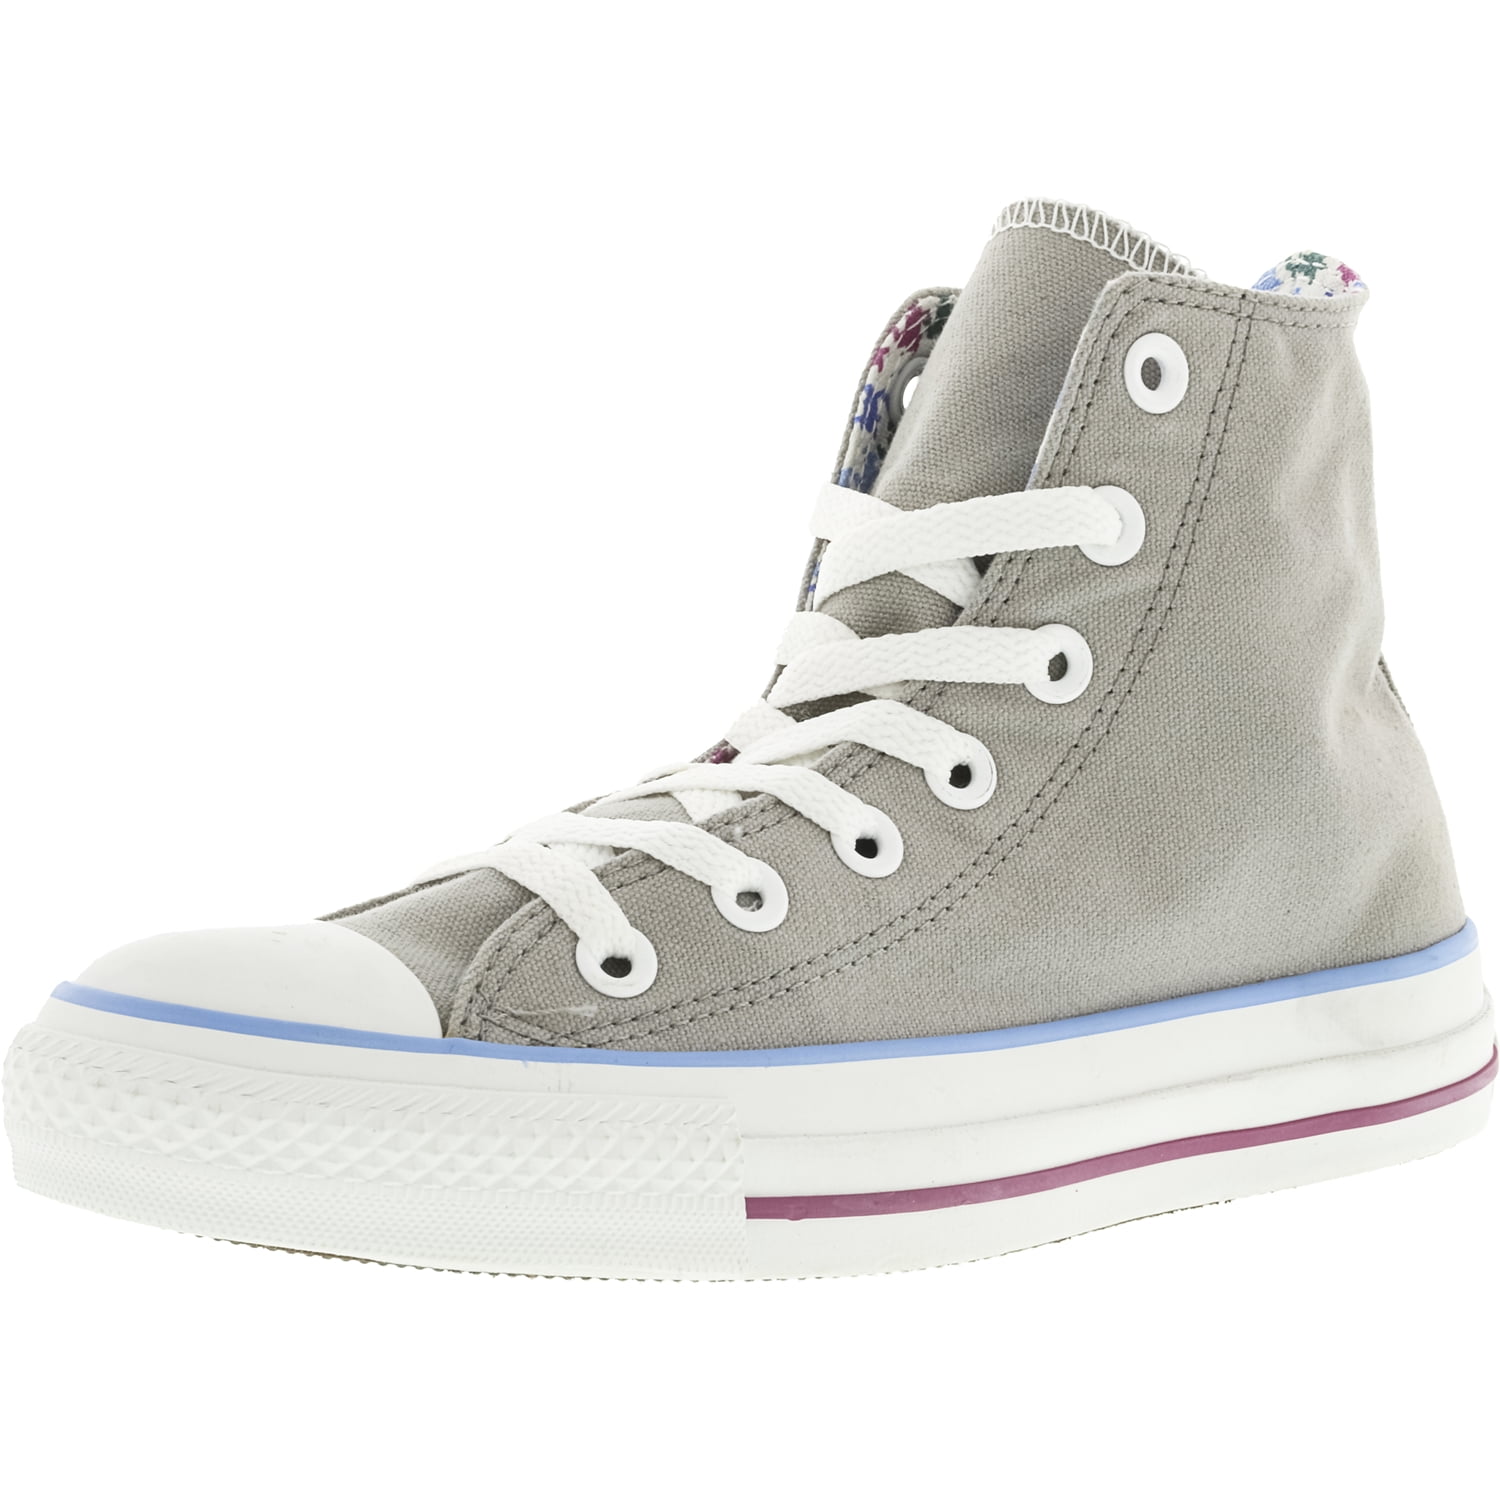 Converse Chuck Taylor Hi Ankle-High Canvas Fashion Sneaker - 6M / 4M - Walmart.com